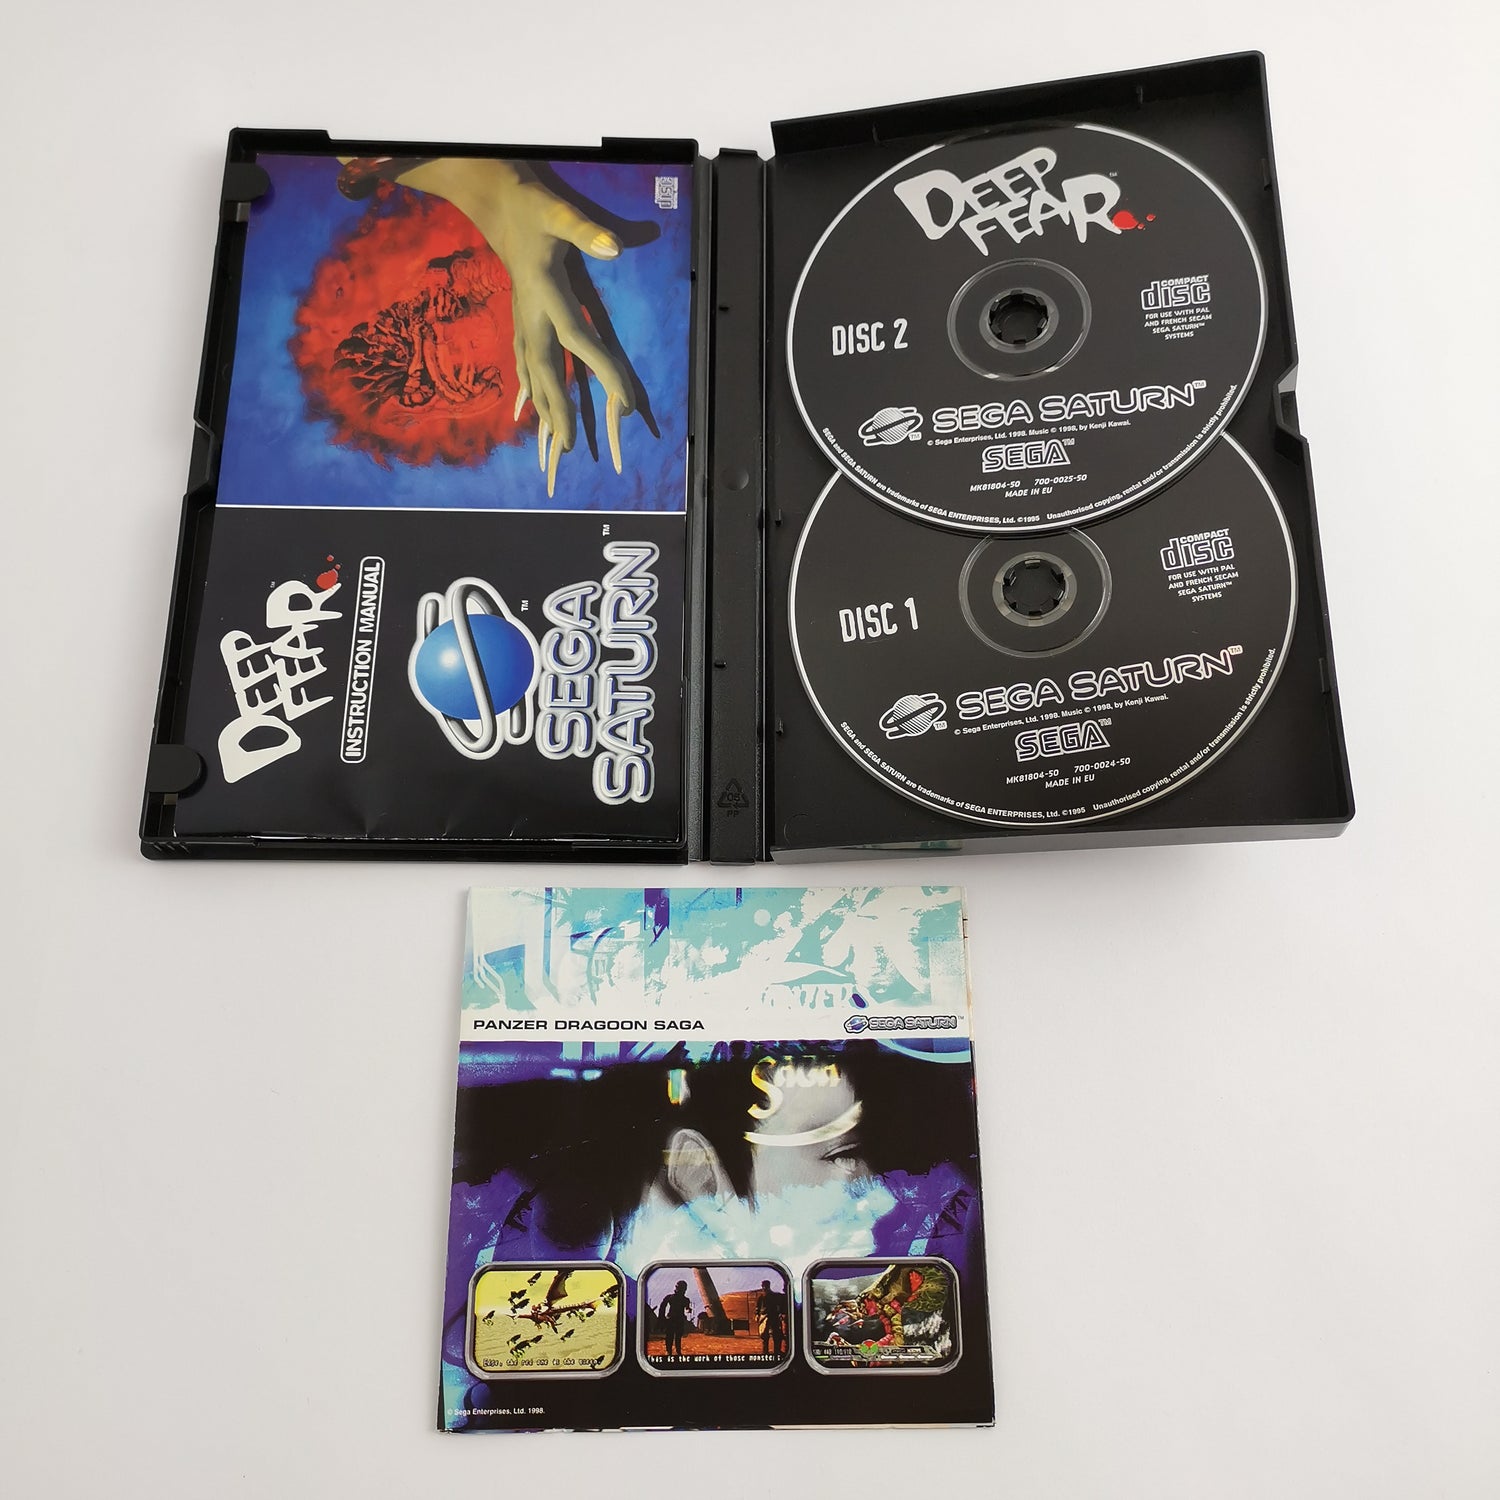 Sega Saturn Game: Deep Fear - Original Packaging & Instructions | PAL version